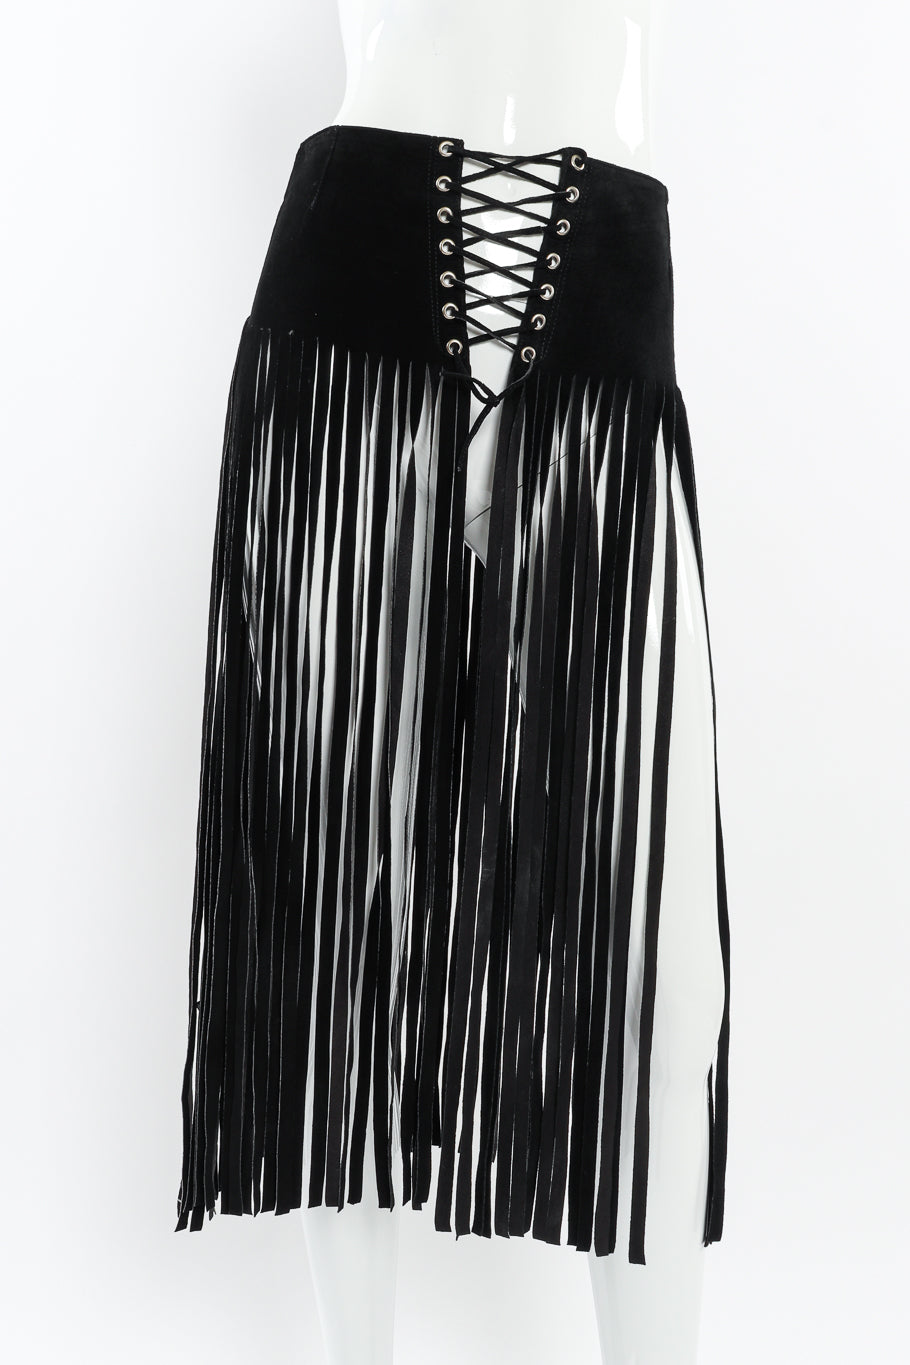 leather fringe belt skirt by Free Art Studio on mannequin front @recessla